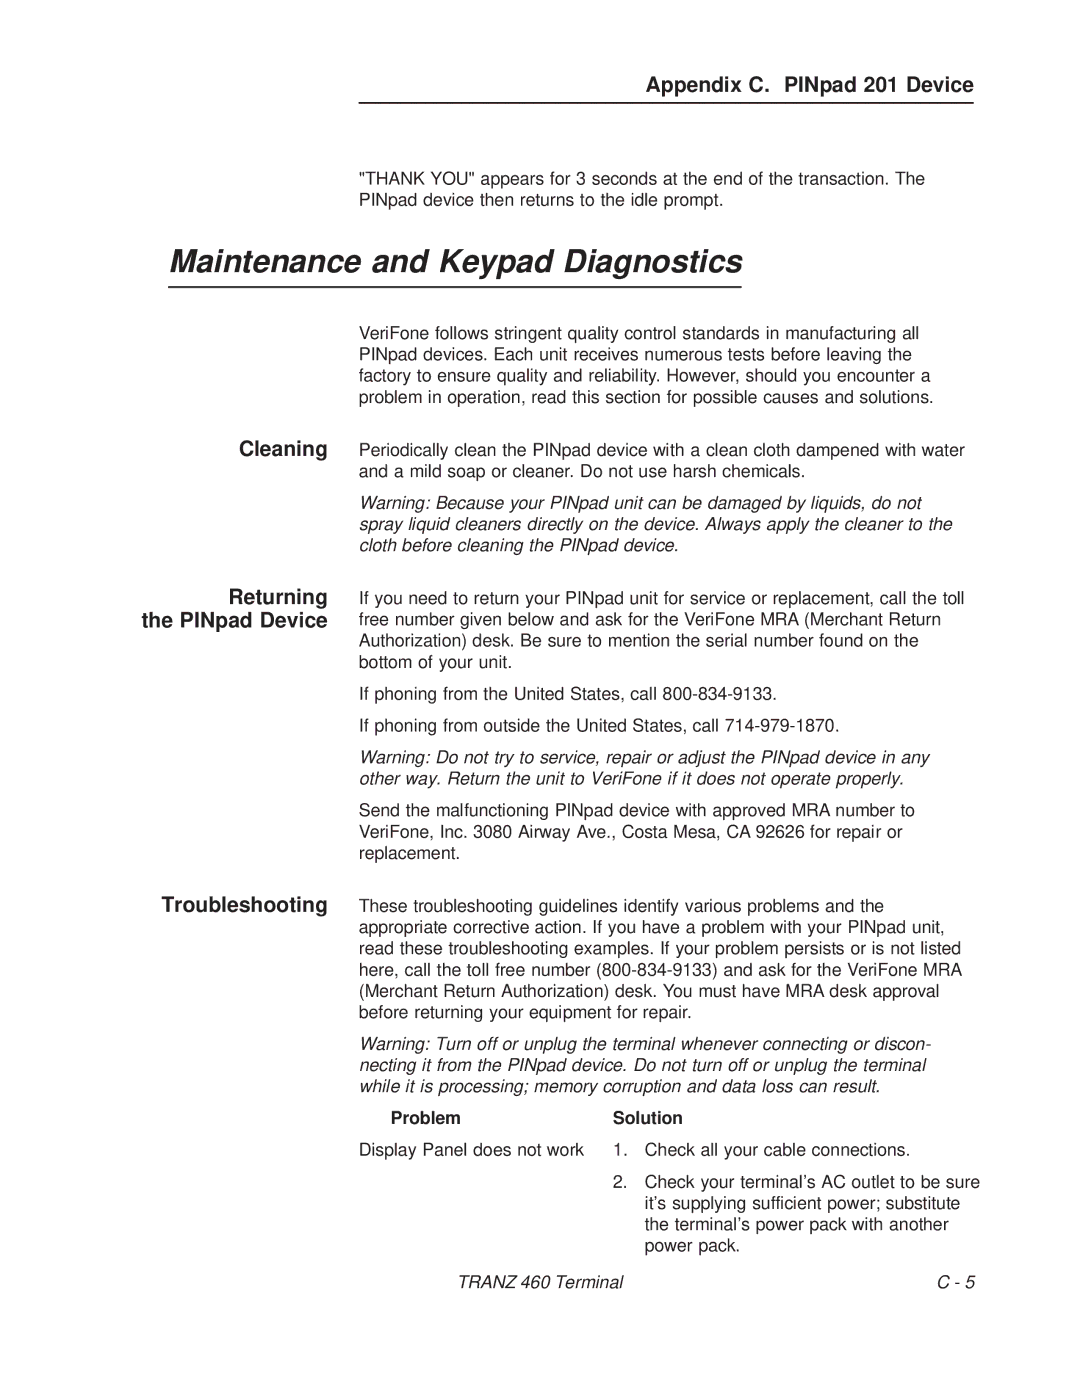 VeriFone TRANZ 460 manual Maintenance and Keypad Diagnostics, ProblemSolution 